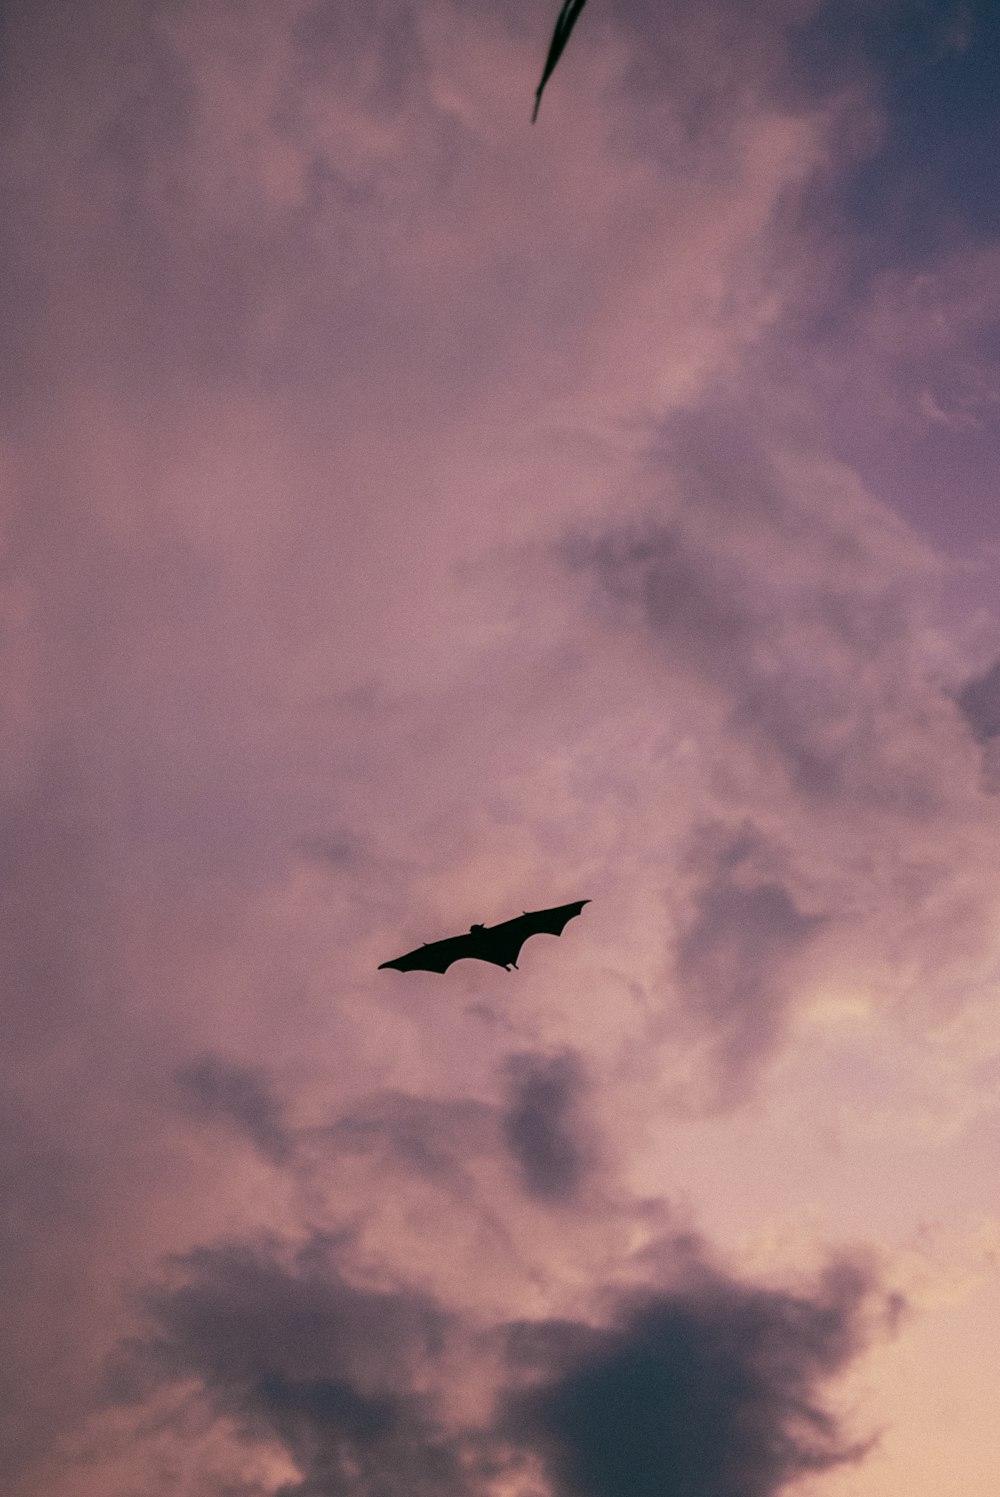 a couple of bats flying through a cloudy sky